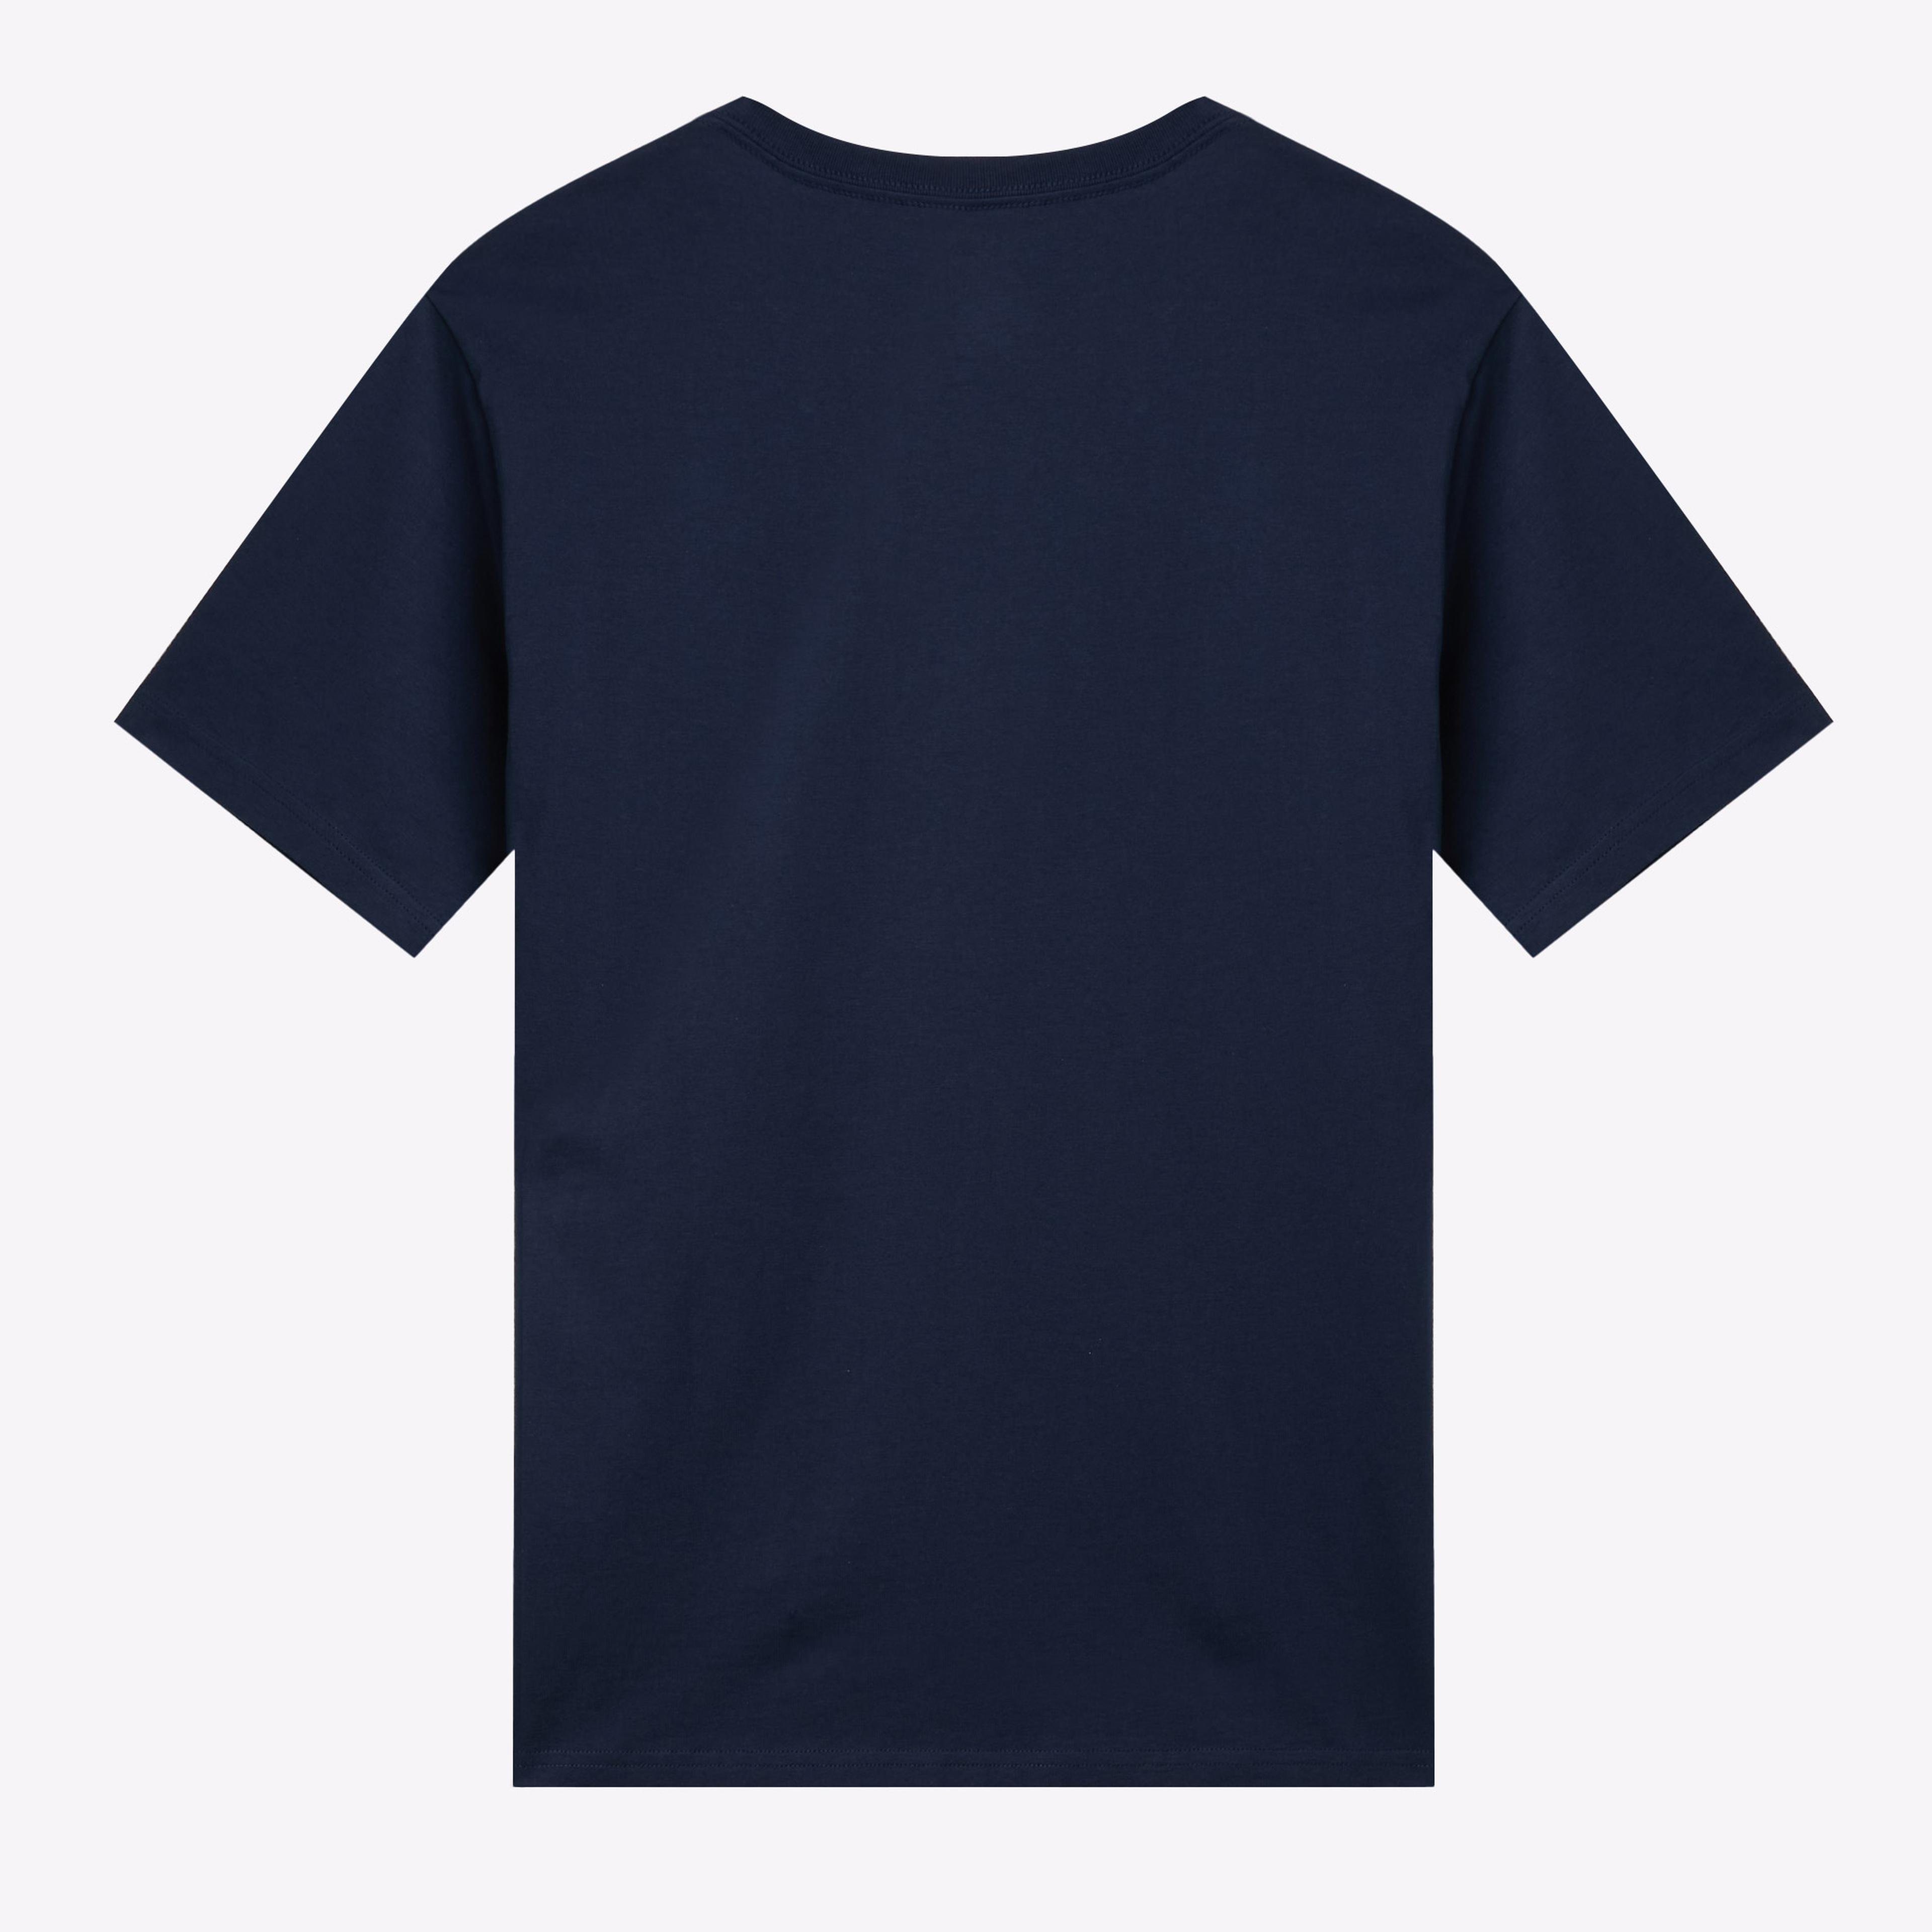 Converse Star Chevron Erkek Lacivert T-Shirt